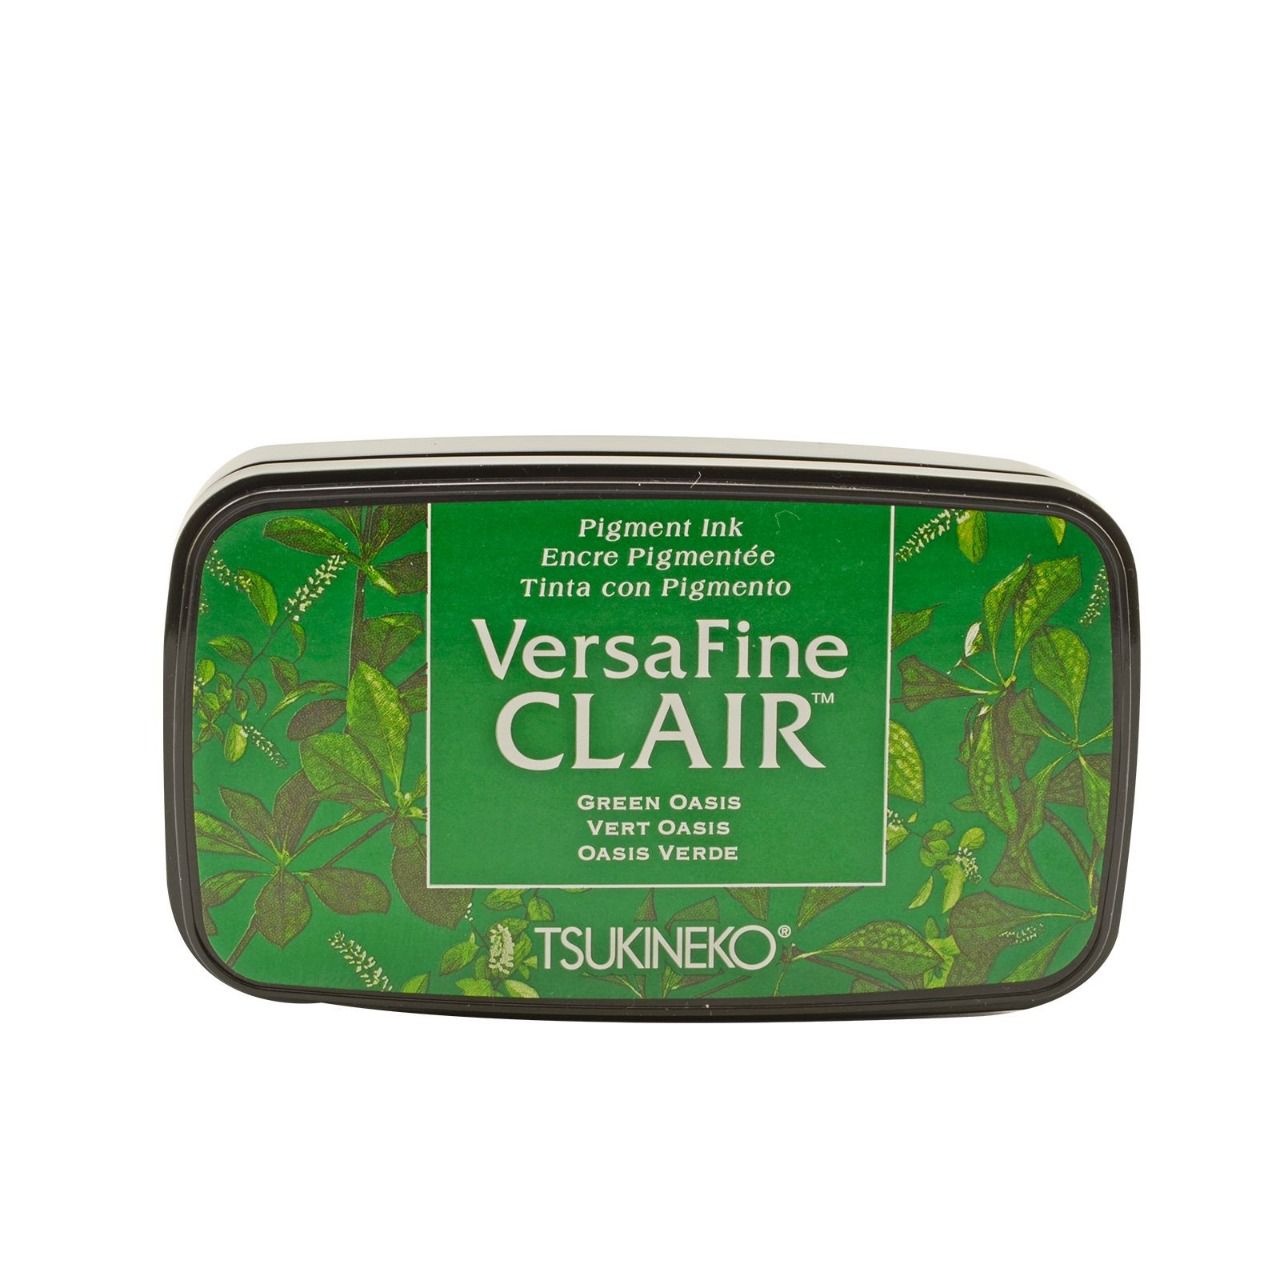 Versafine CLAIR - Vert Oasis